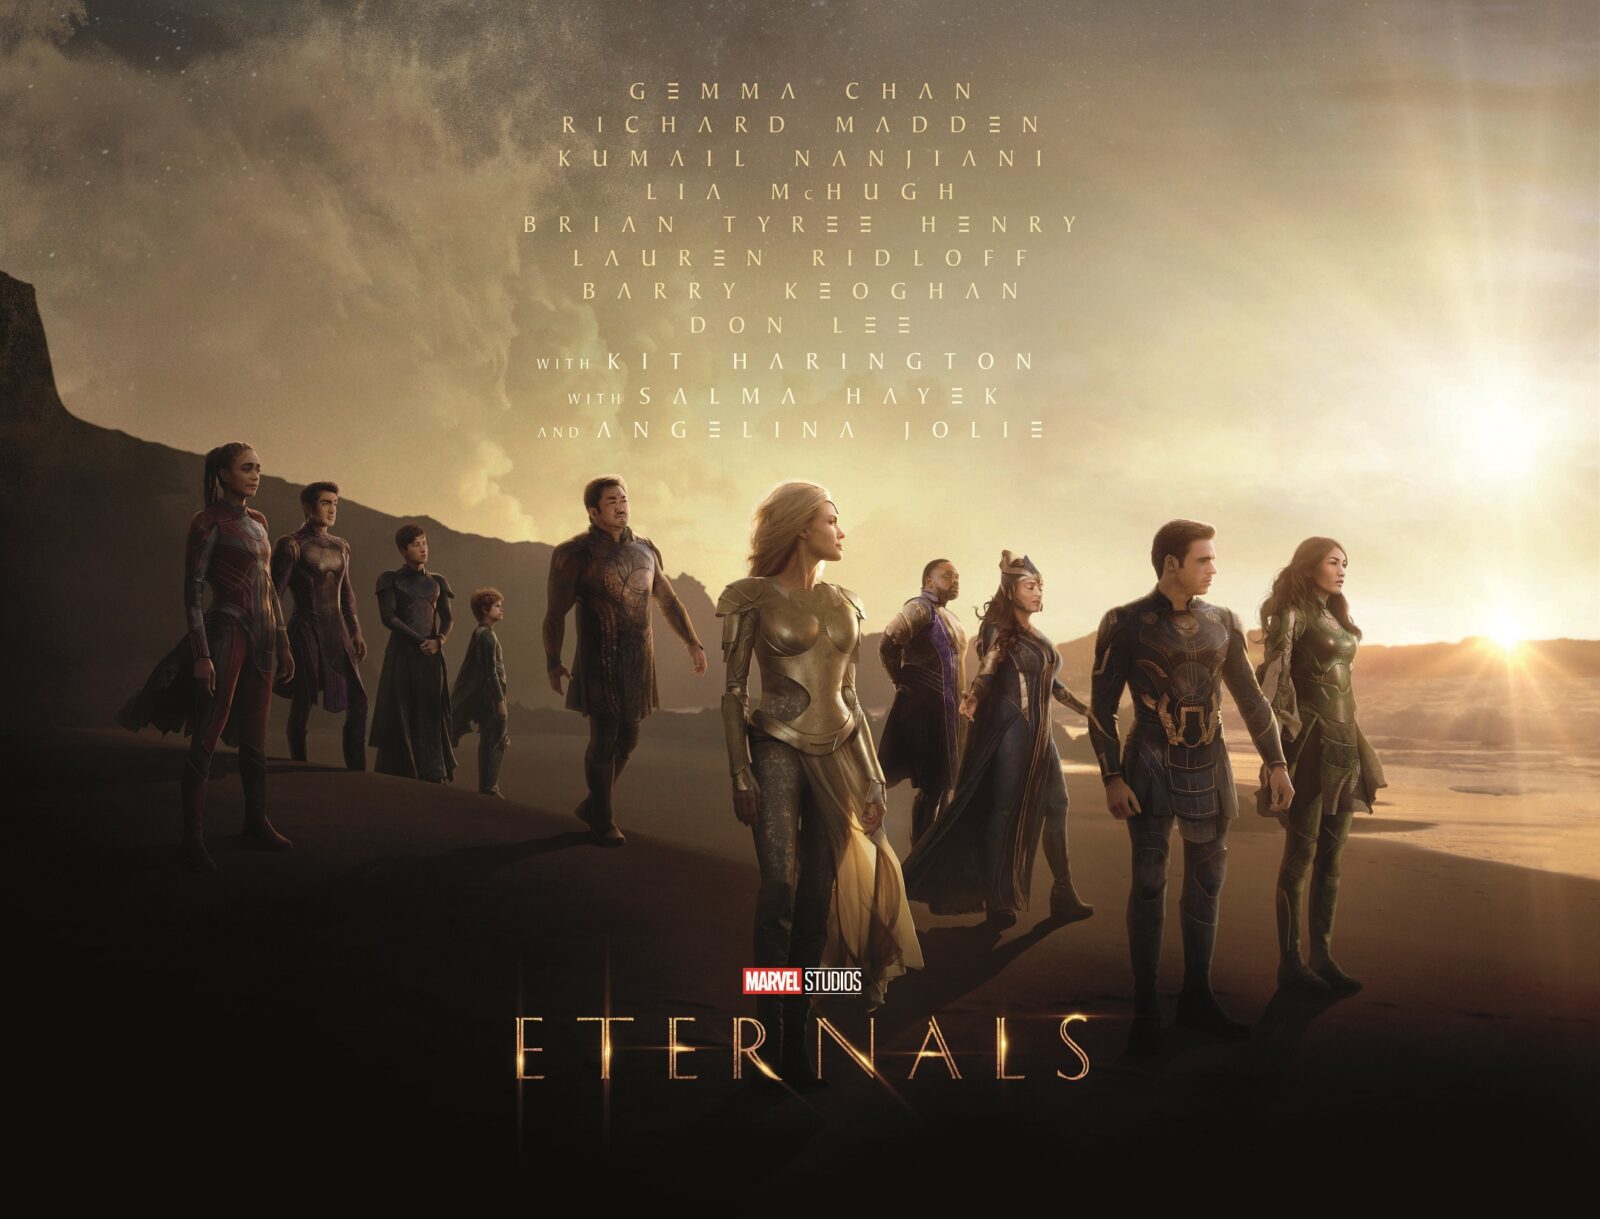 ETN Poster | Eternals ฮีโร่พลังเทพเจ้า | เปิดตำนาน 5 นักคิด และ 5 นักสู้ จาก Eternals ฮีโร่พลังเทพเจ้า